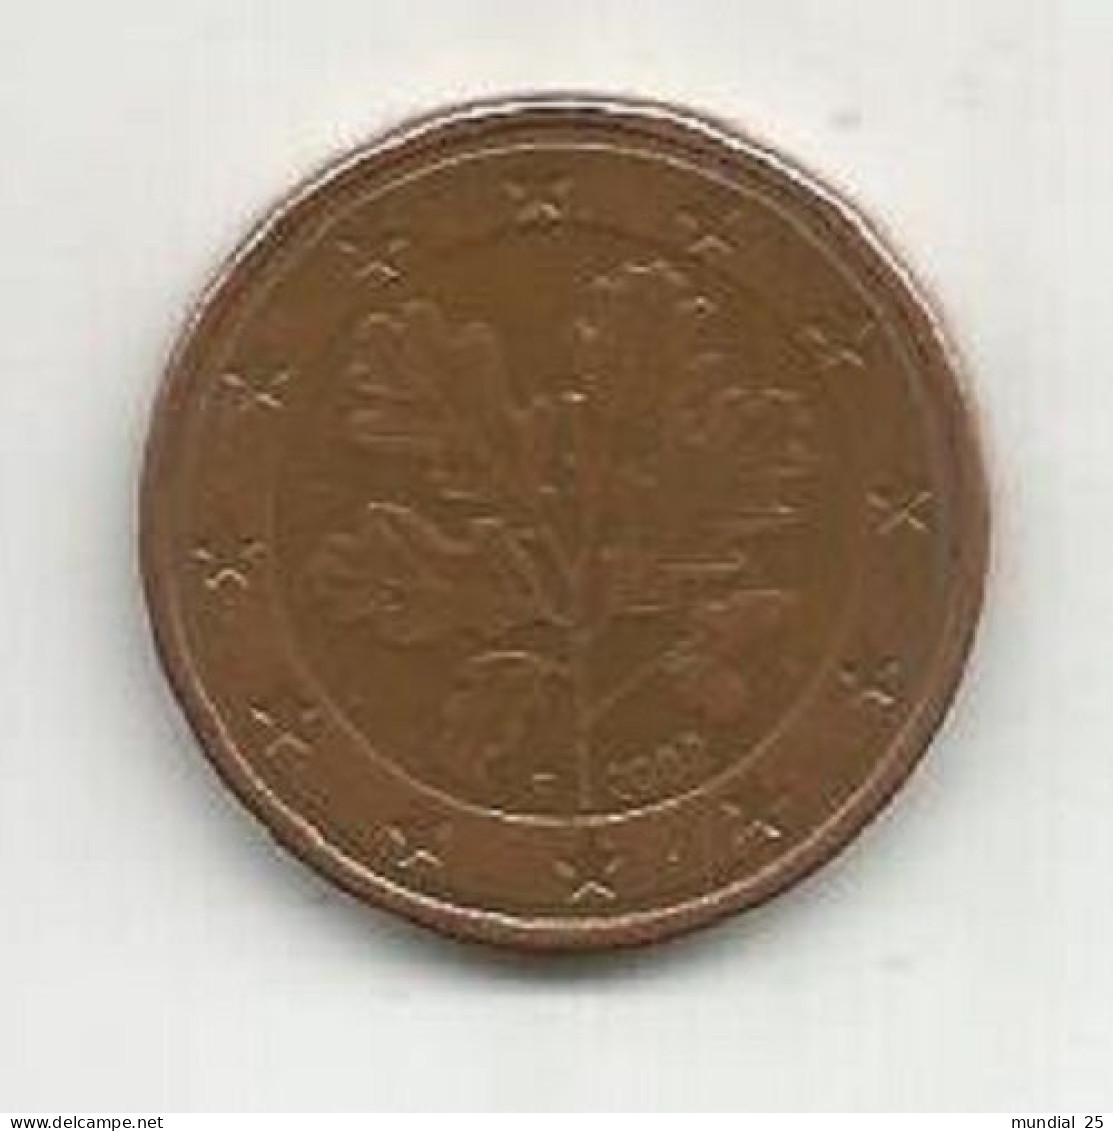 GERMANY 5 EURO CENT 2002 (F) - Germania